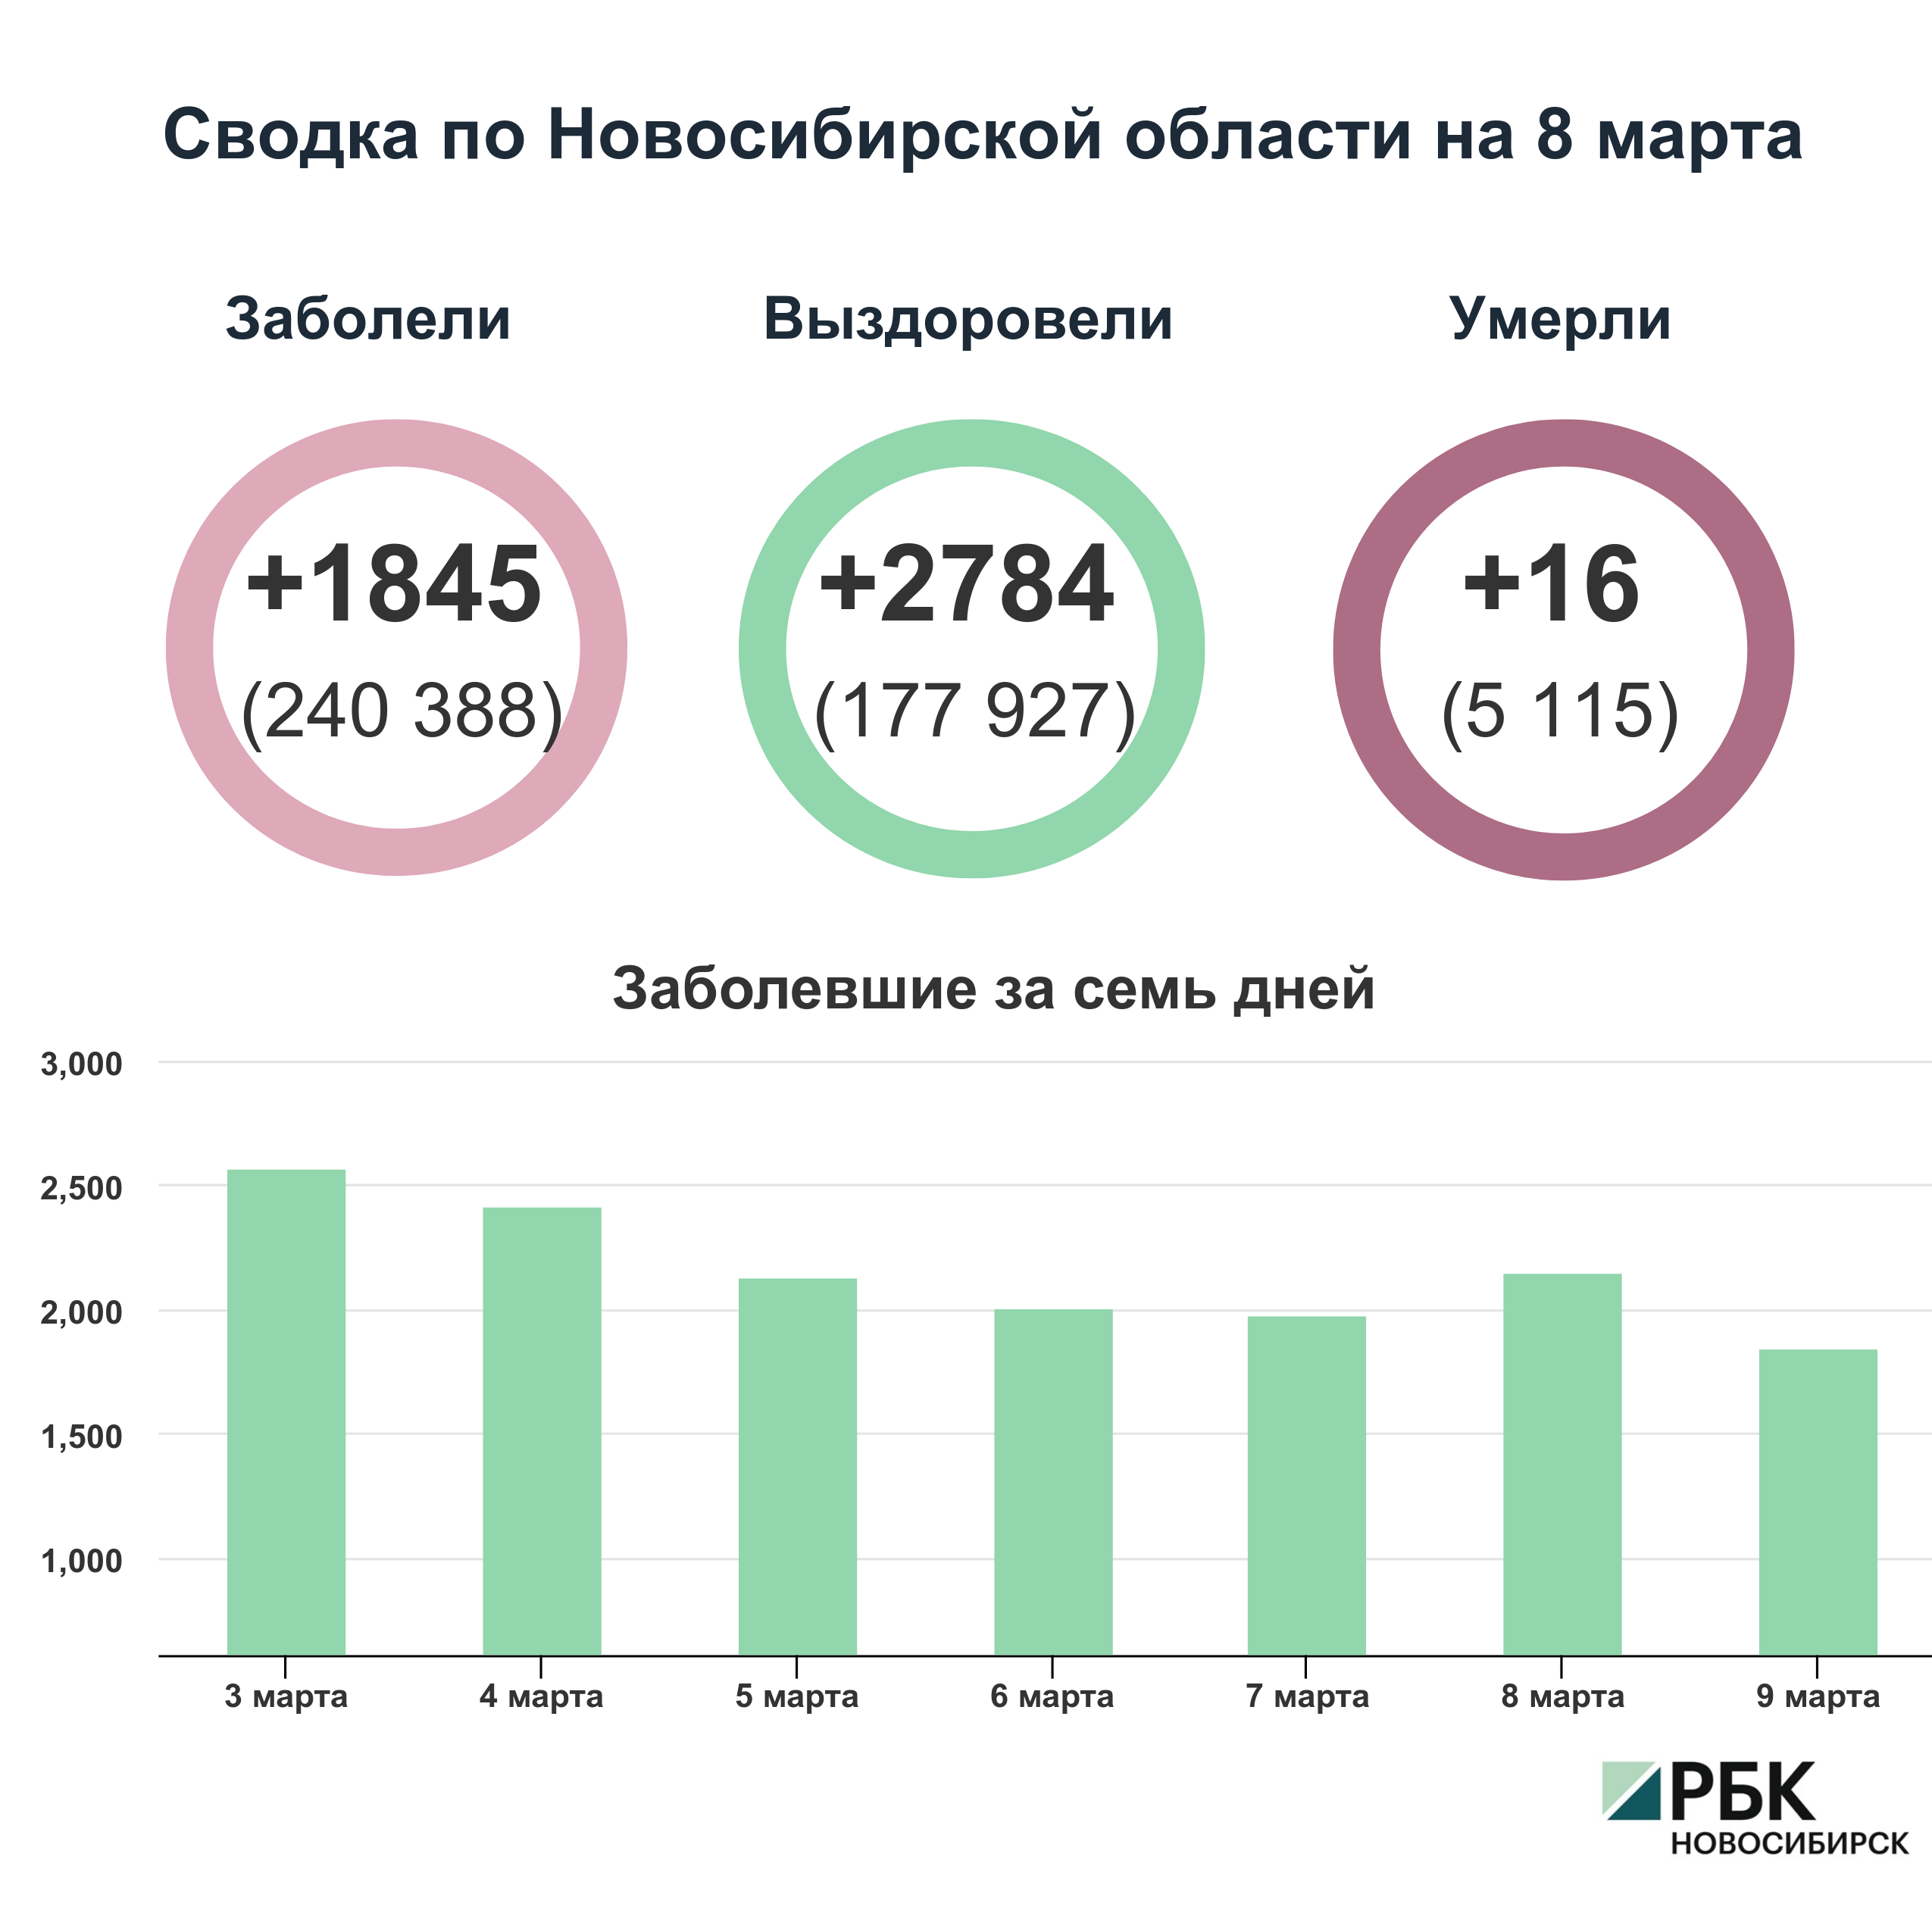 Коронавирус в Новосибирске: сводка на 9 марта